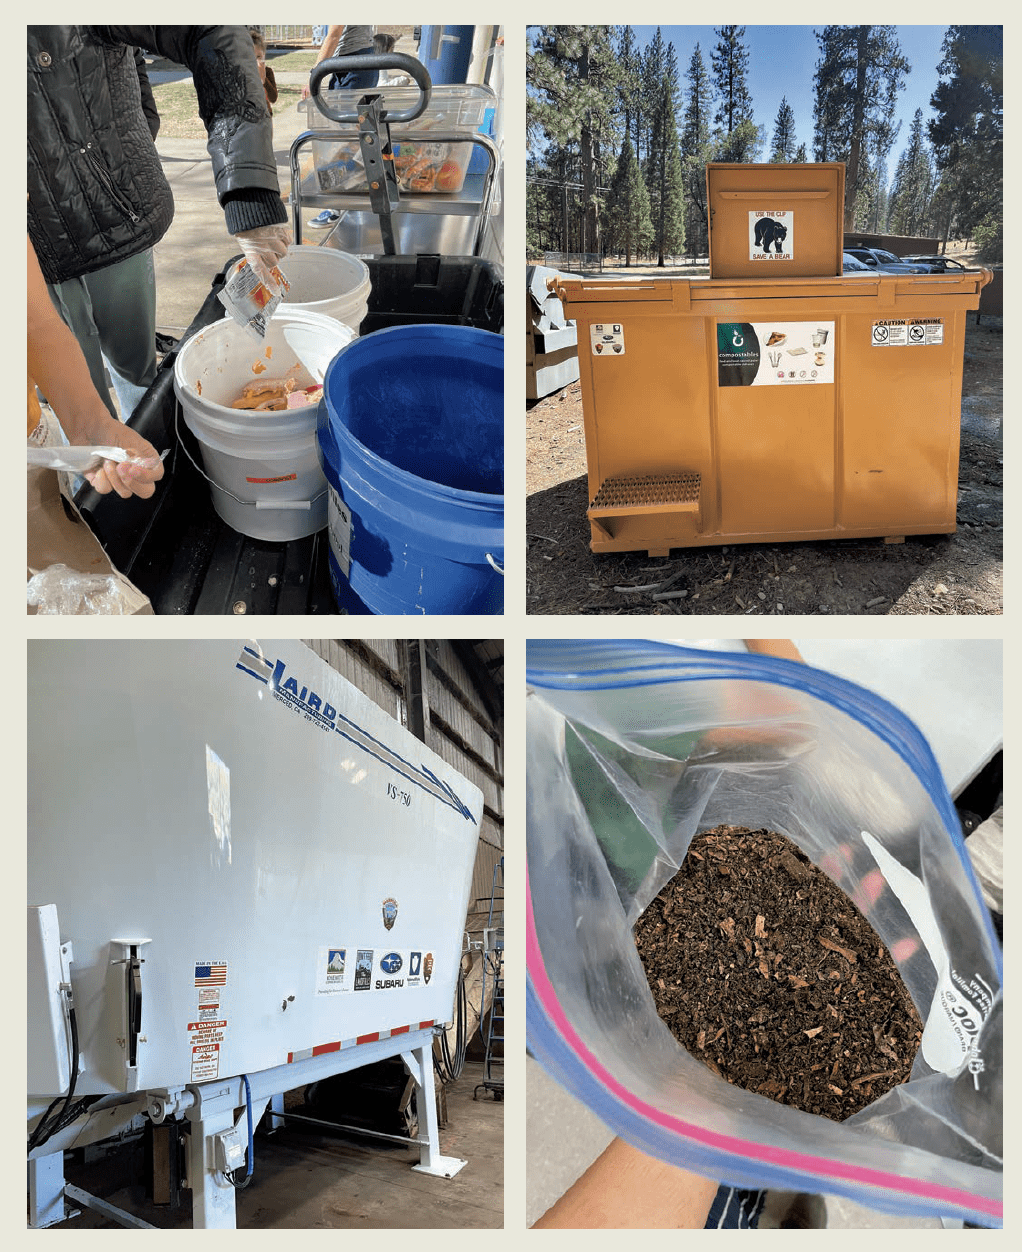 Local schoolchildren established a composting program as part of the Yosemite Residential Food Waste Diversion Pilot.